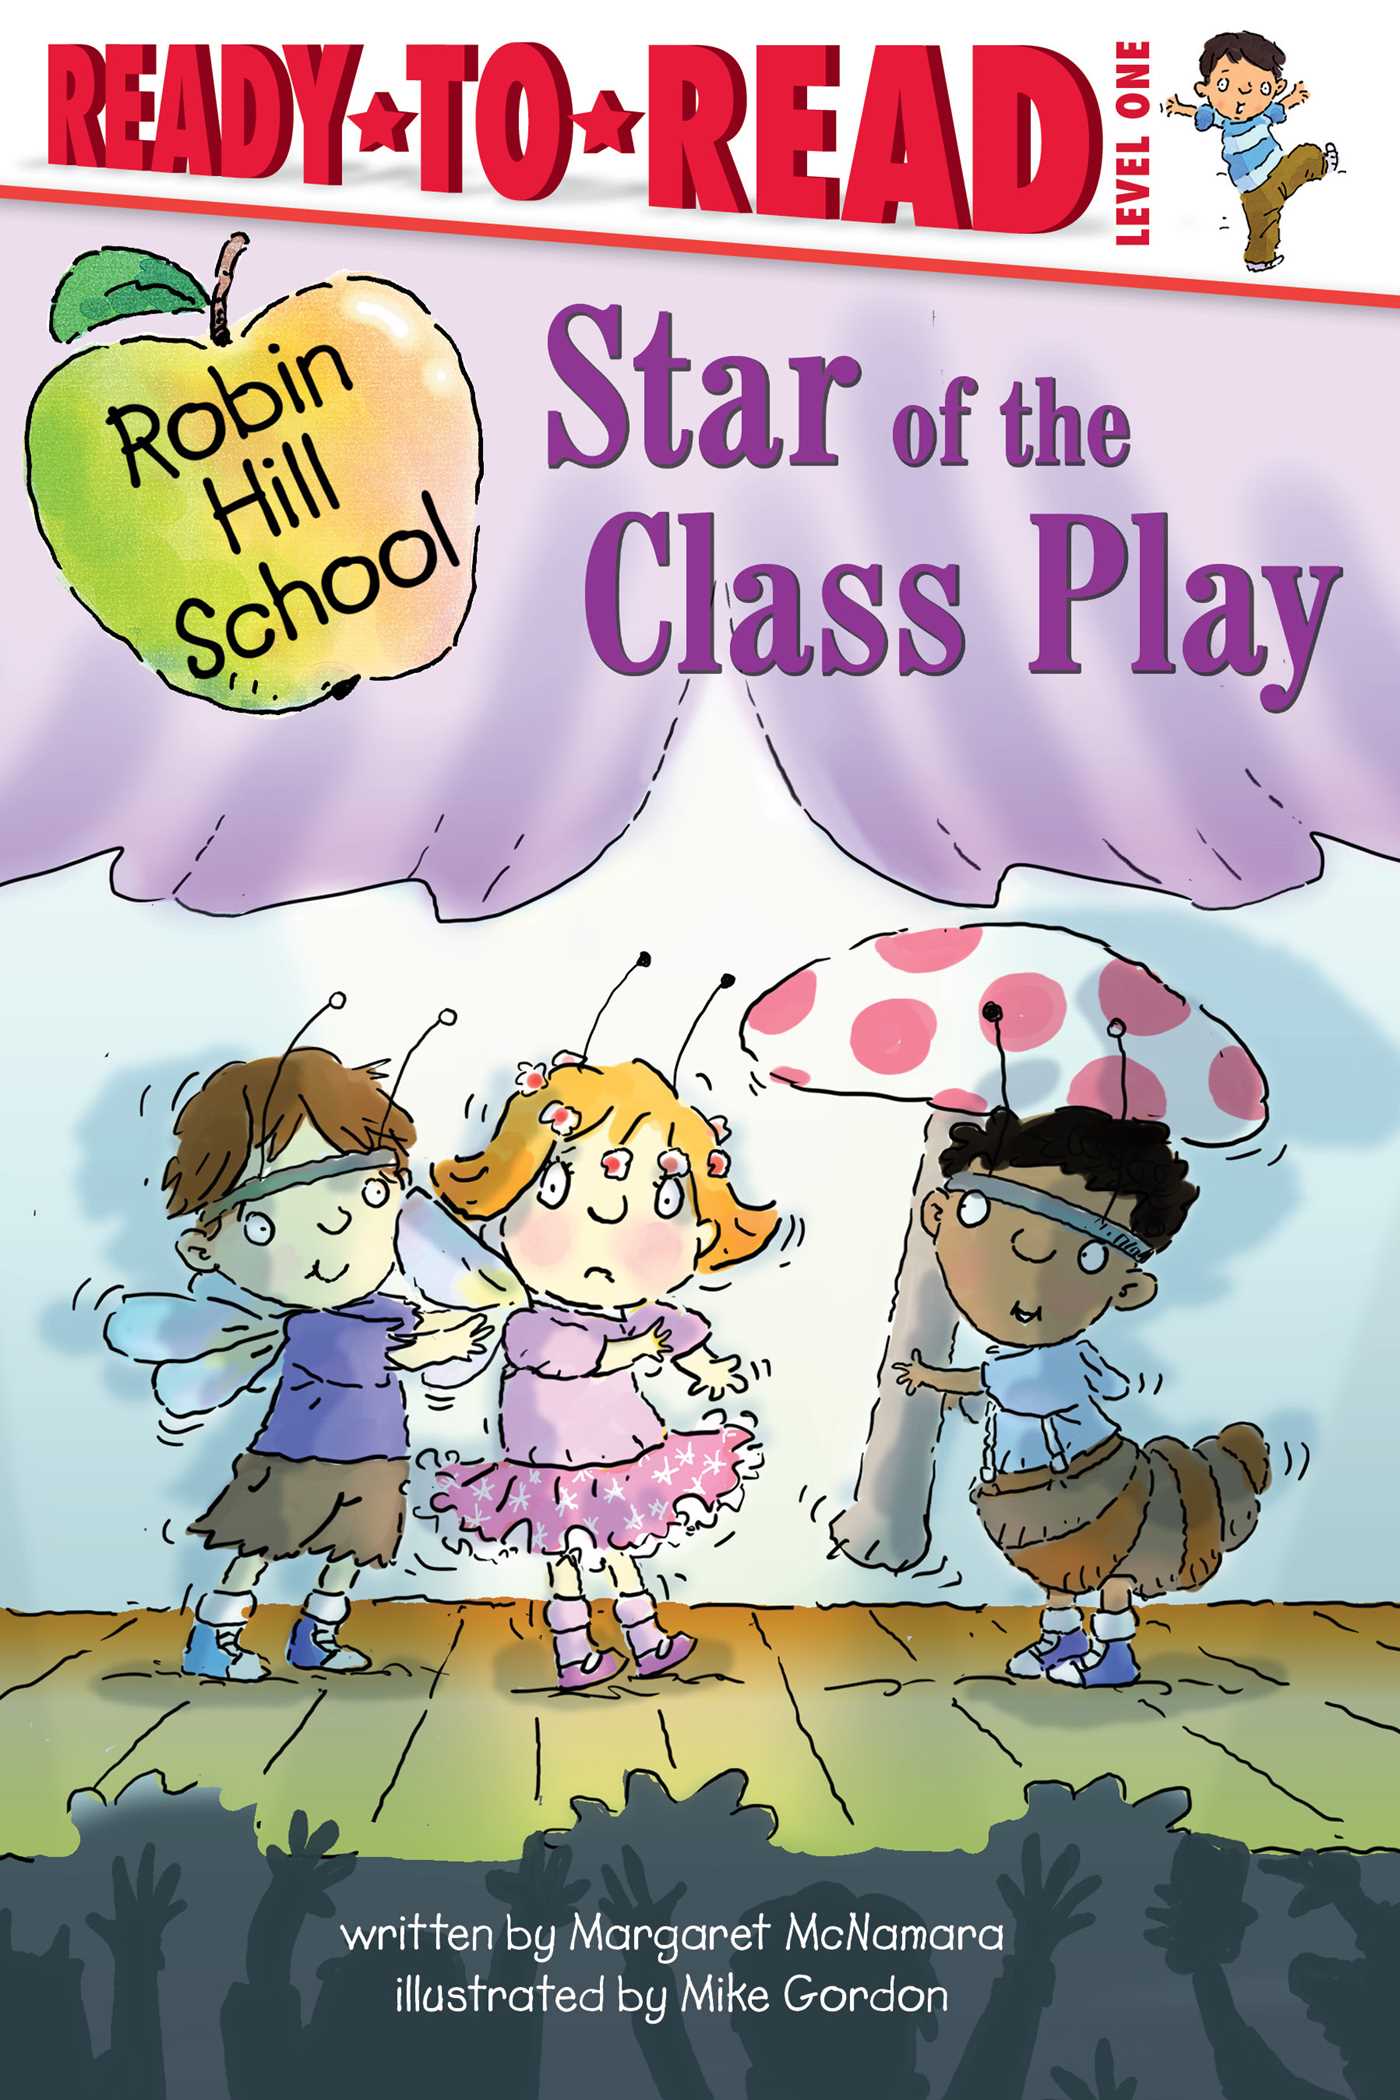 Robin Hill School - Star of the Class Play (level 1) | McNamara, Margaret